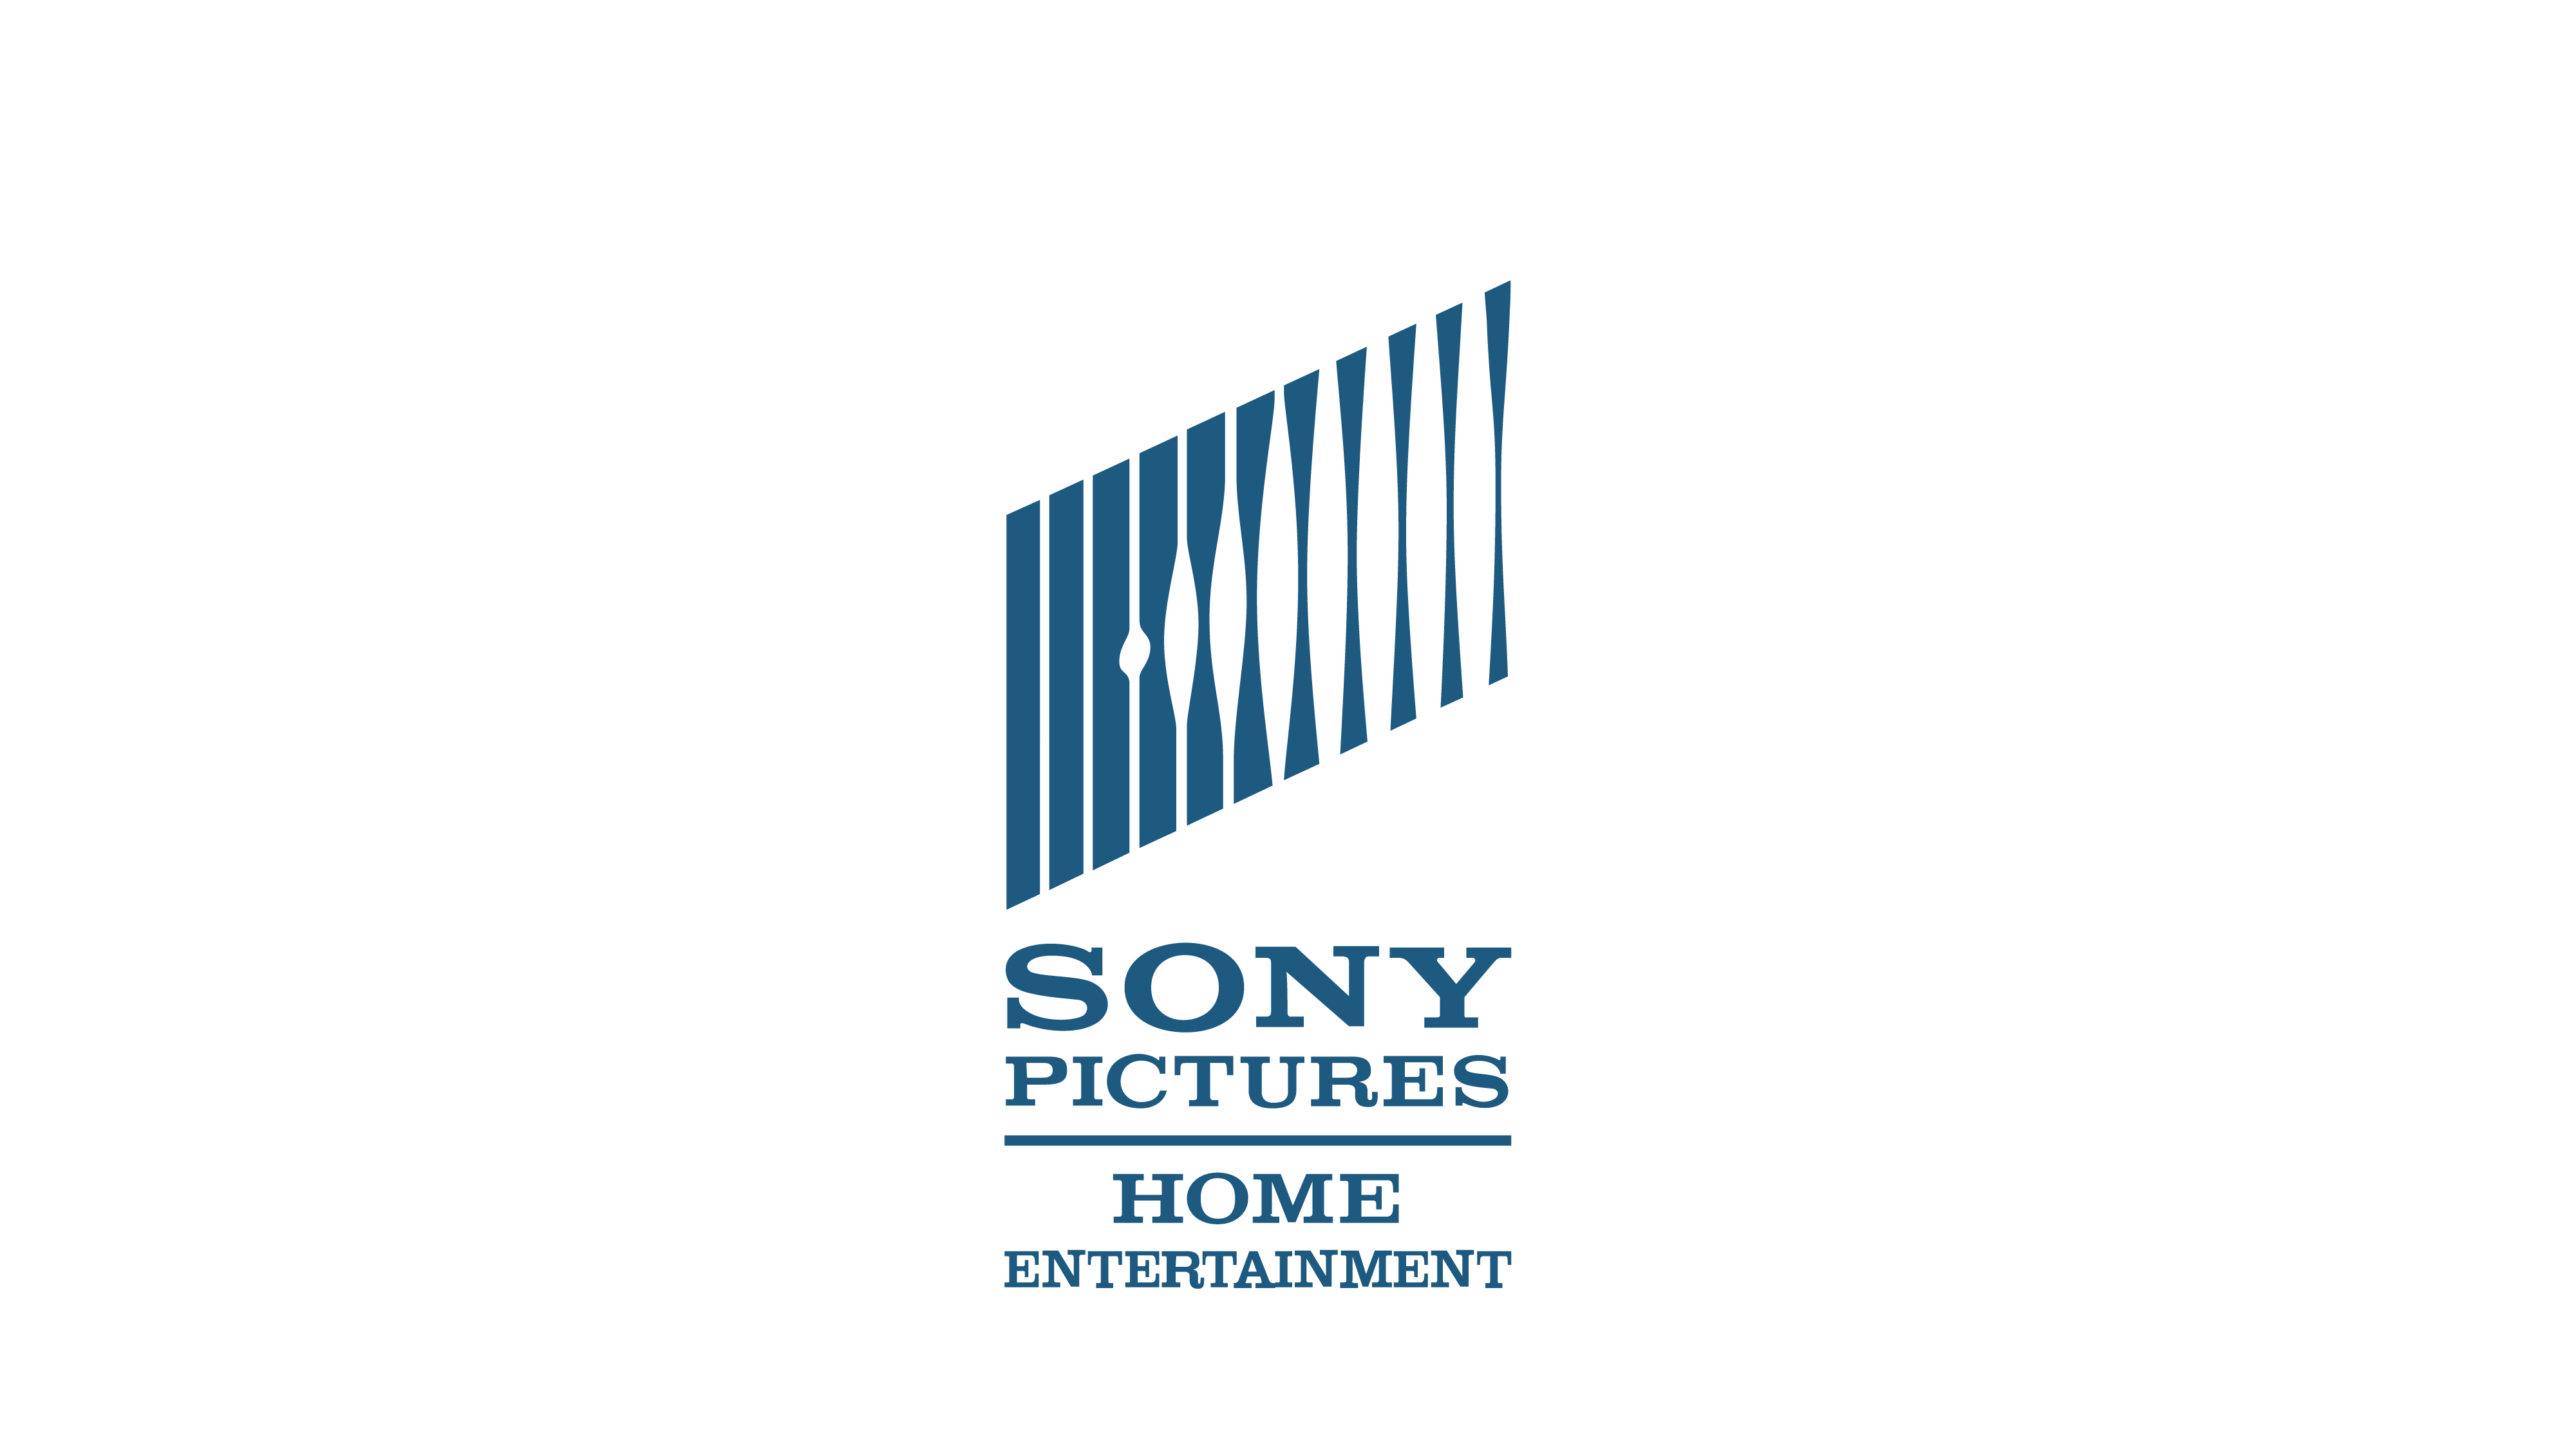 Сони пикчерс. Sony pictures. Sony Кинокомпания. Киностудия Sony pictures. Sony pictures логотип.